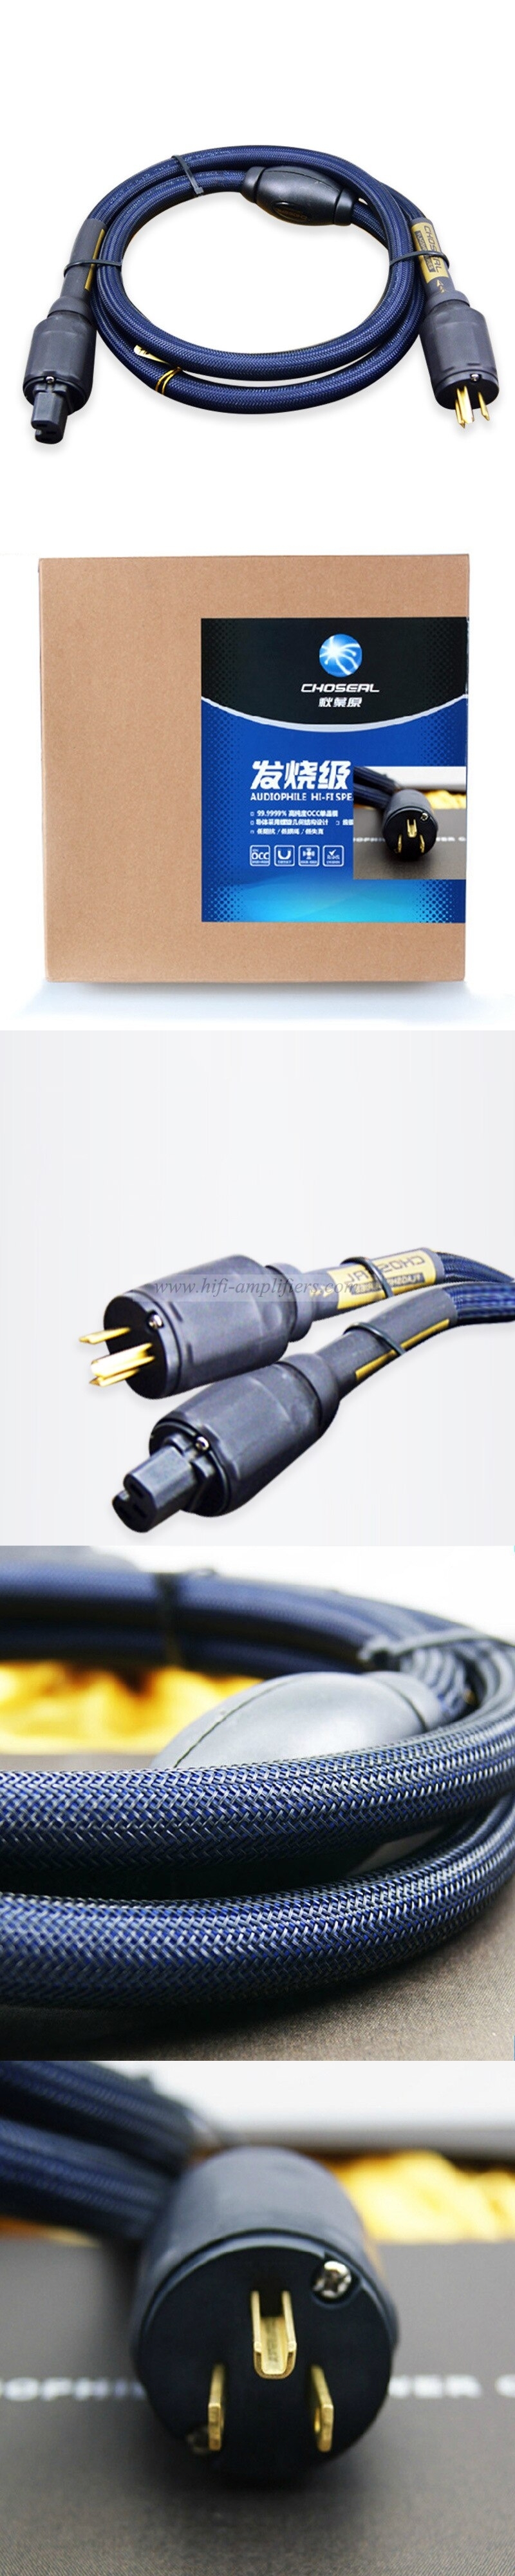 Choseal PB-5702 6N OCC HIFI Audiophlie AC Power Cable  US Plugs